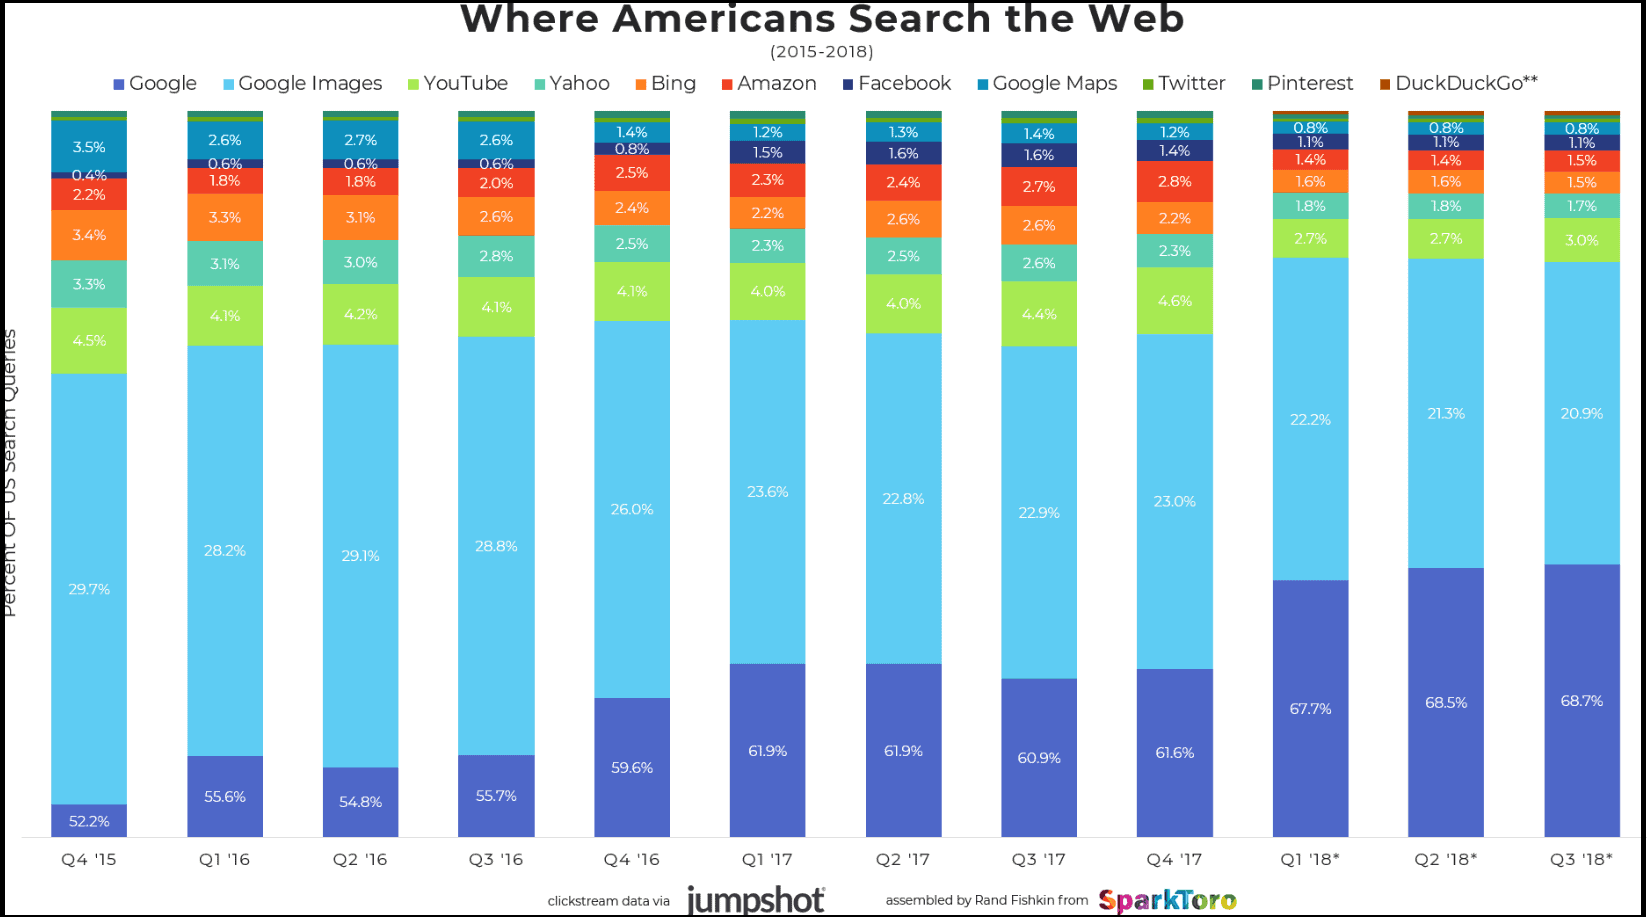 Where americans search the web according to Sparktoro